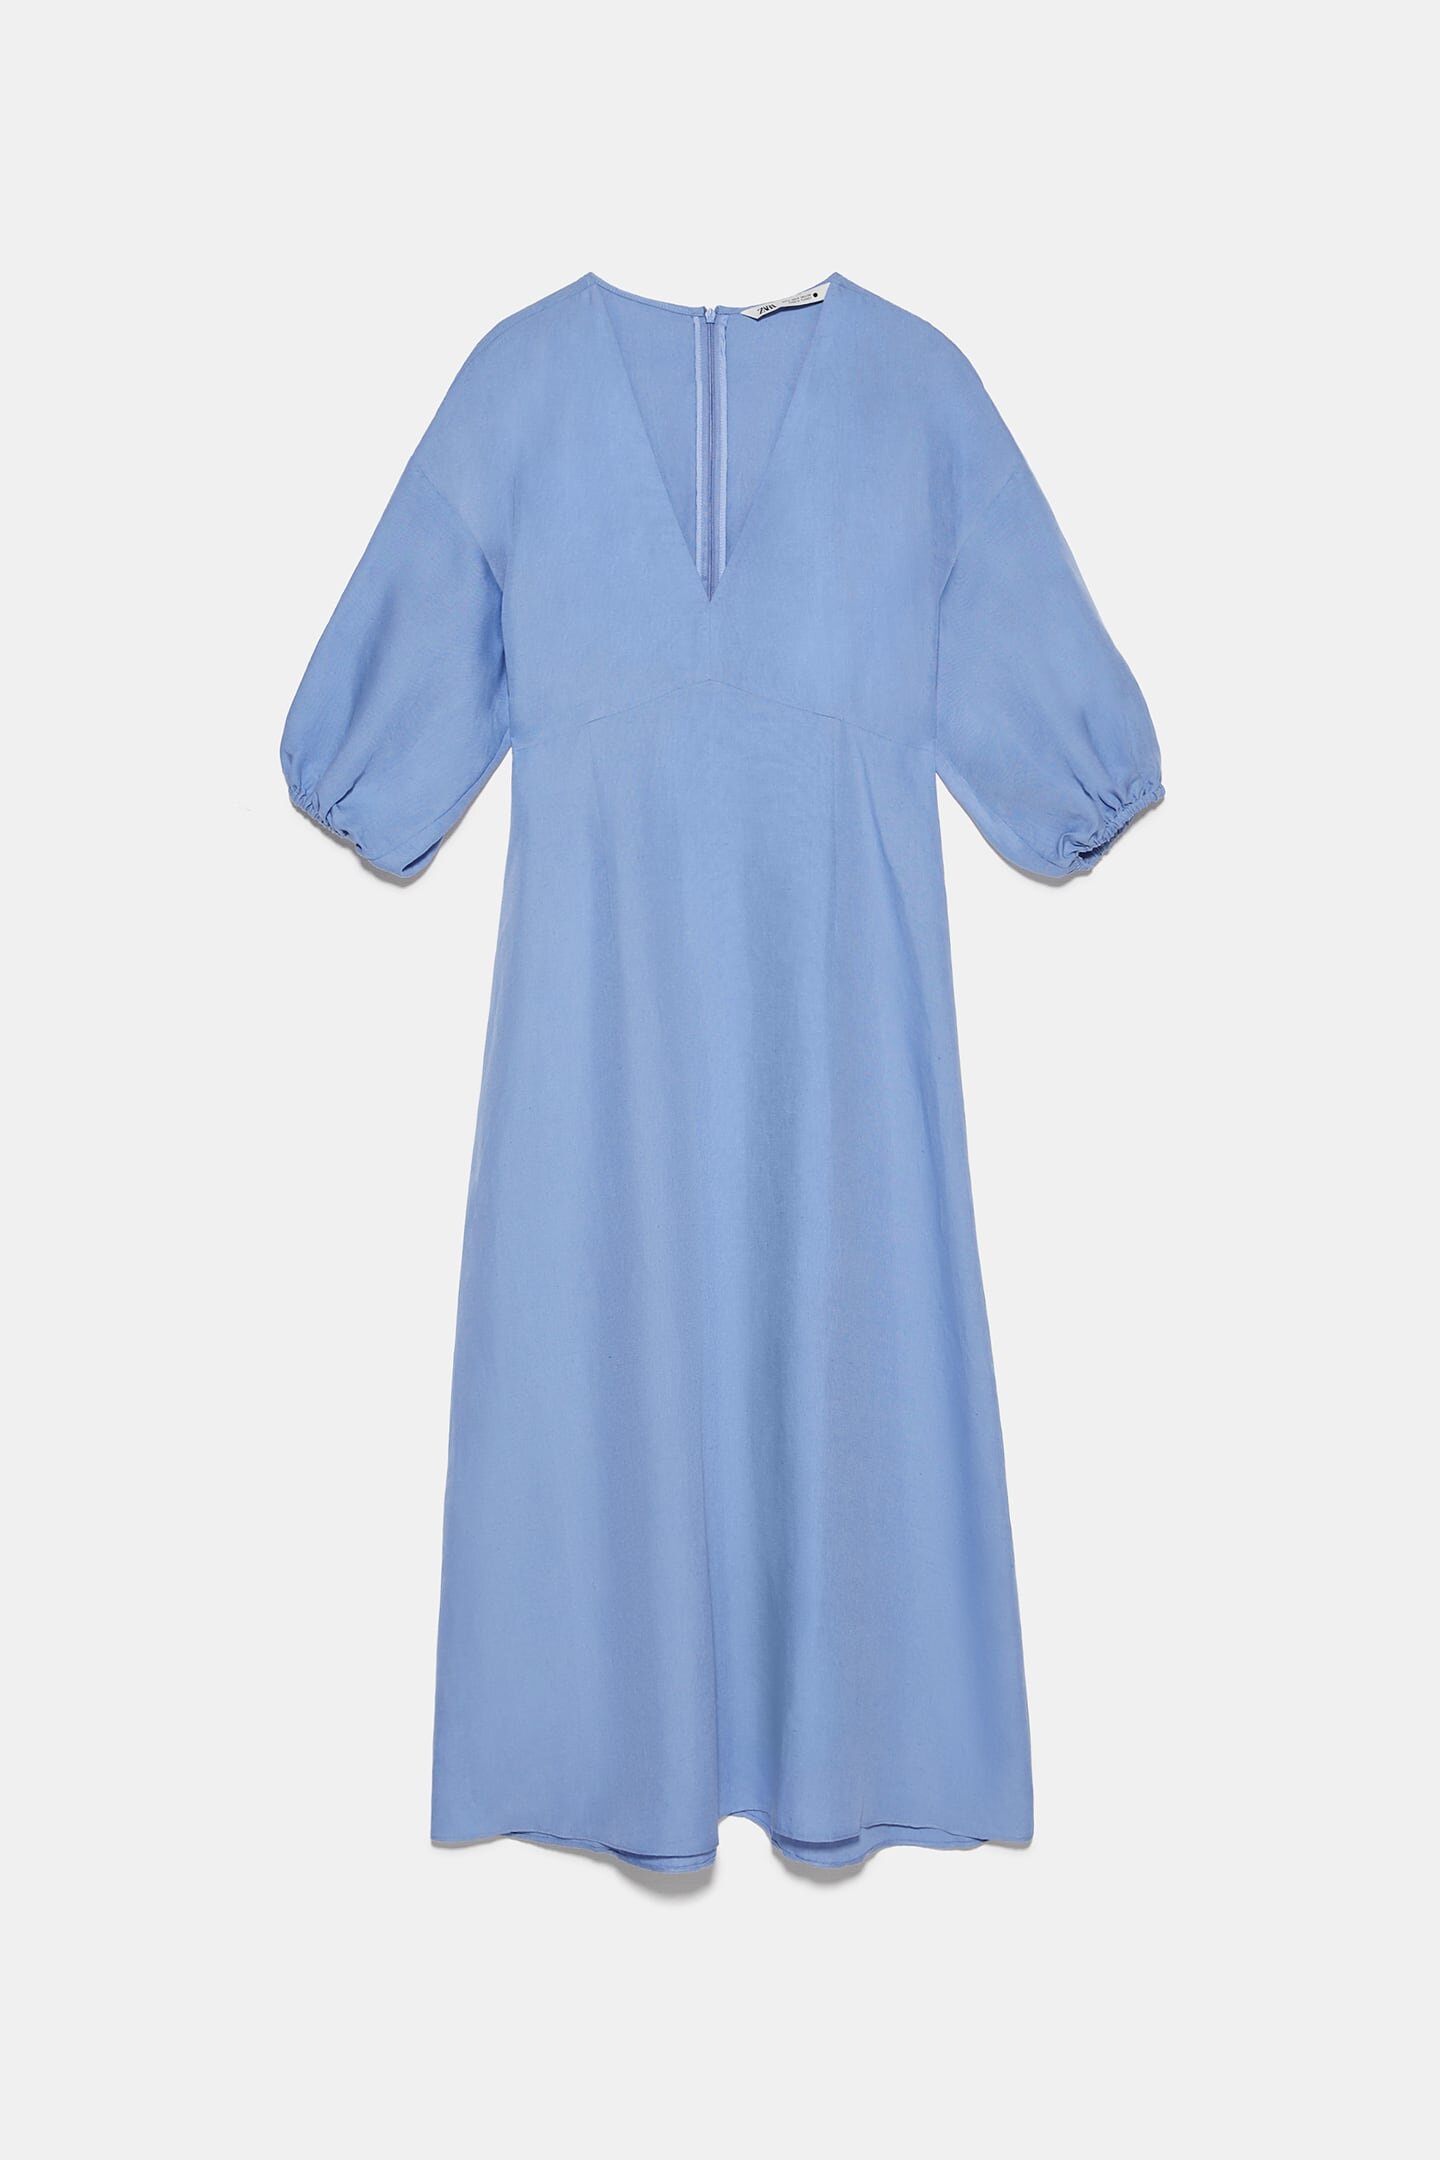 Dress, £49.99, Zara